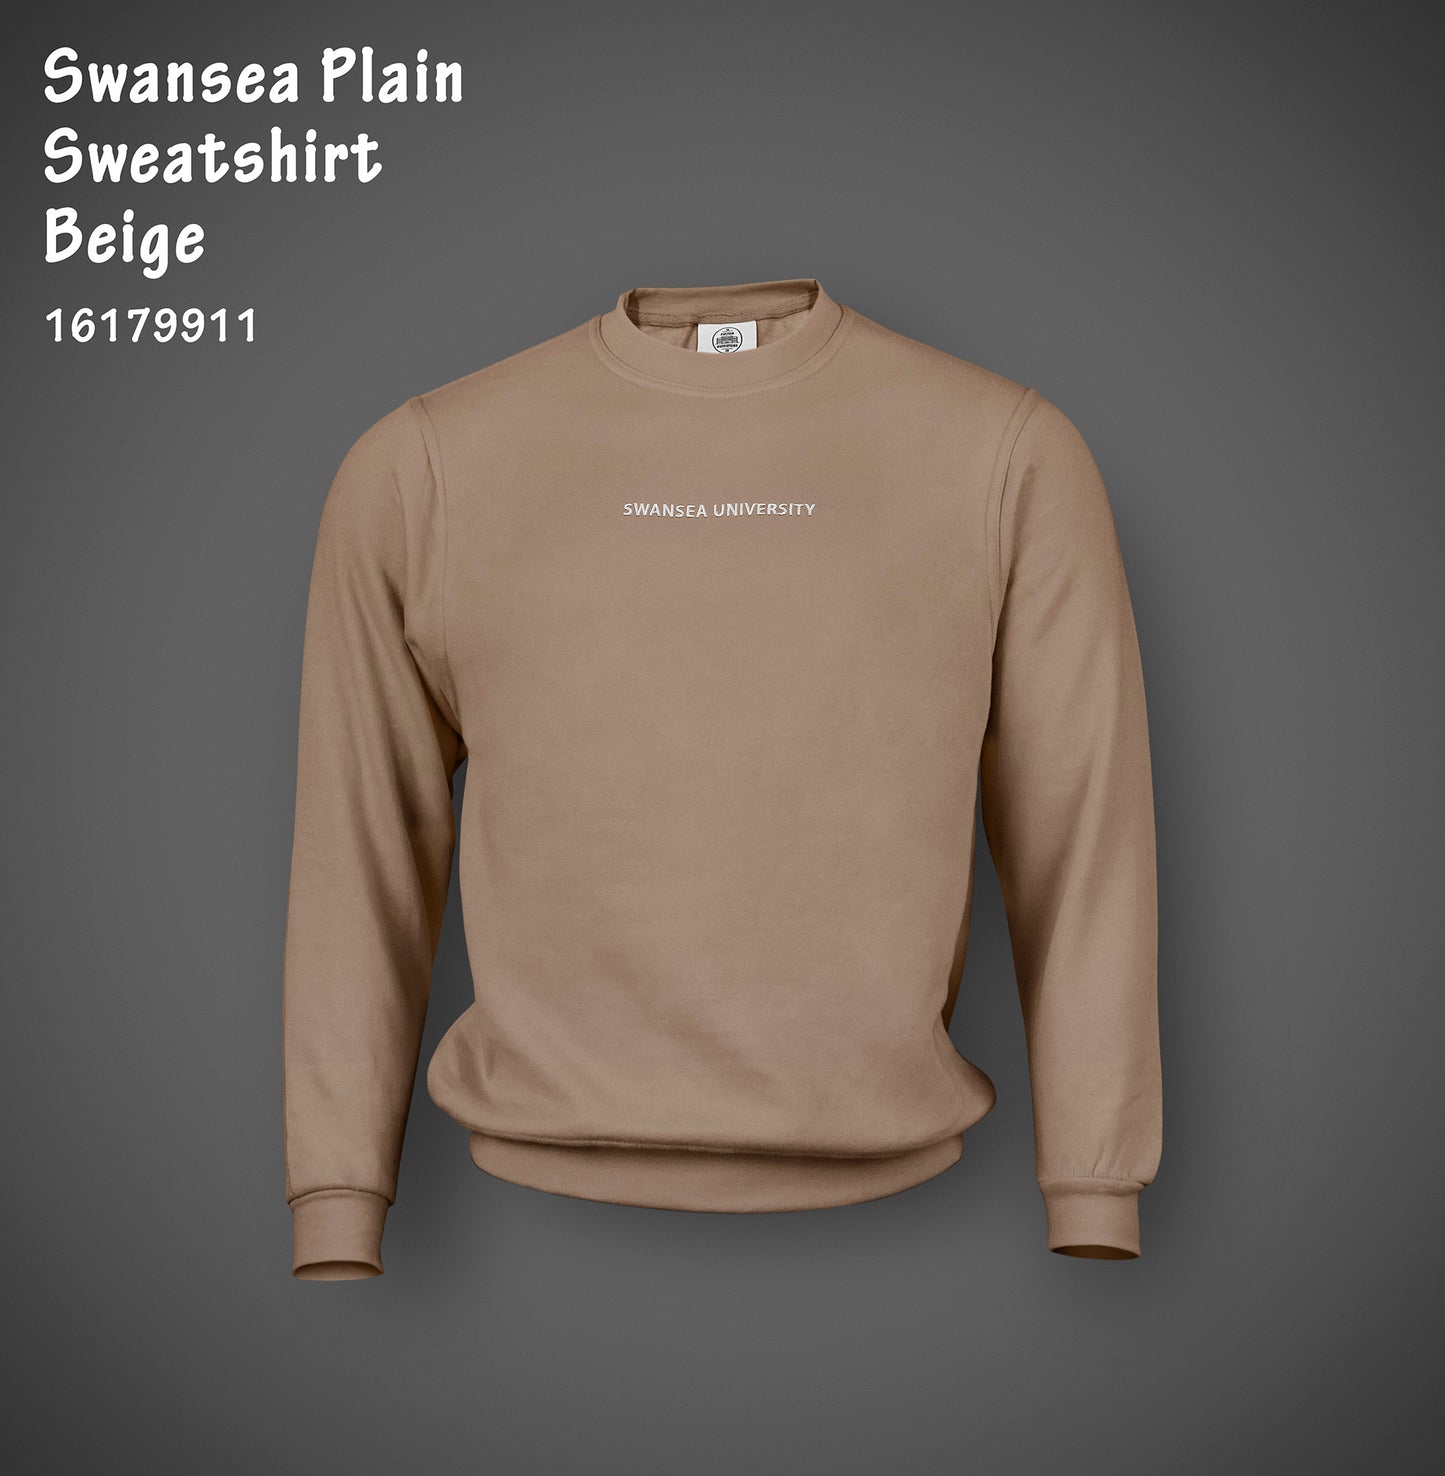 Swansea University Sweatshirt - Minimalist